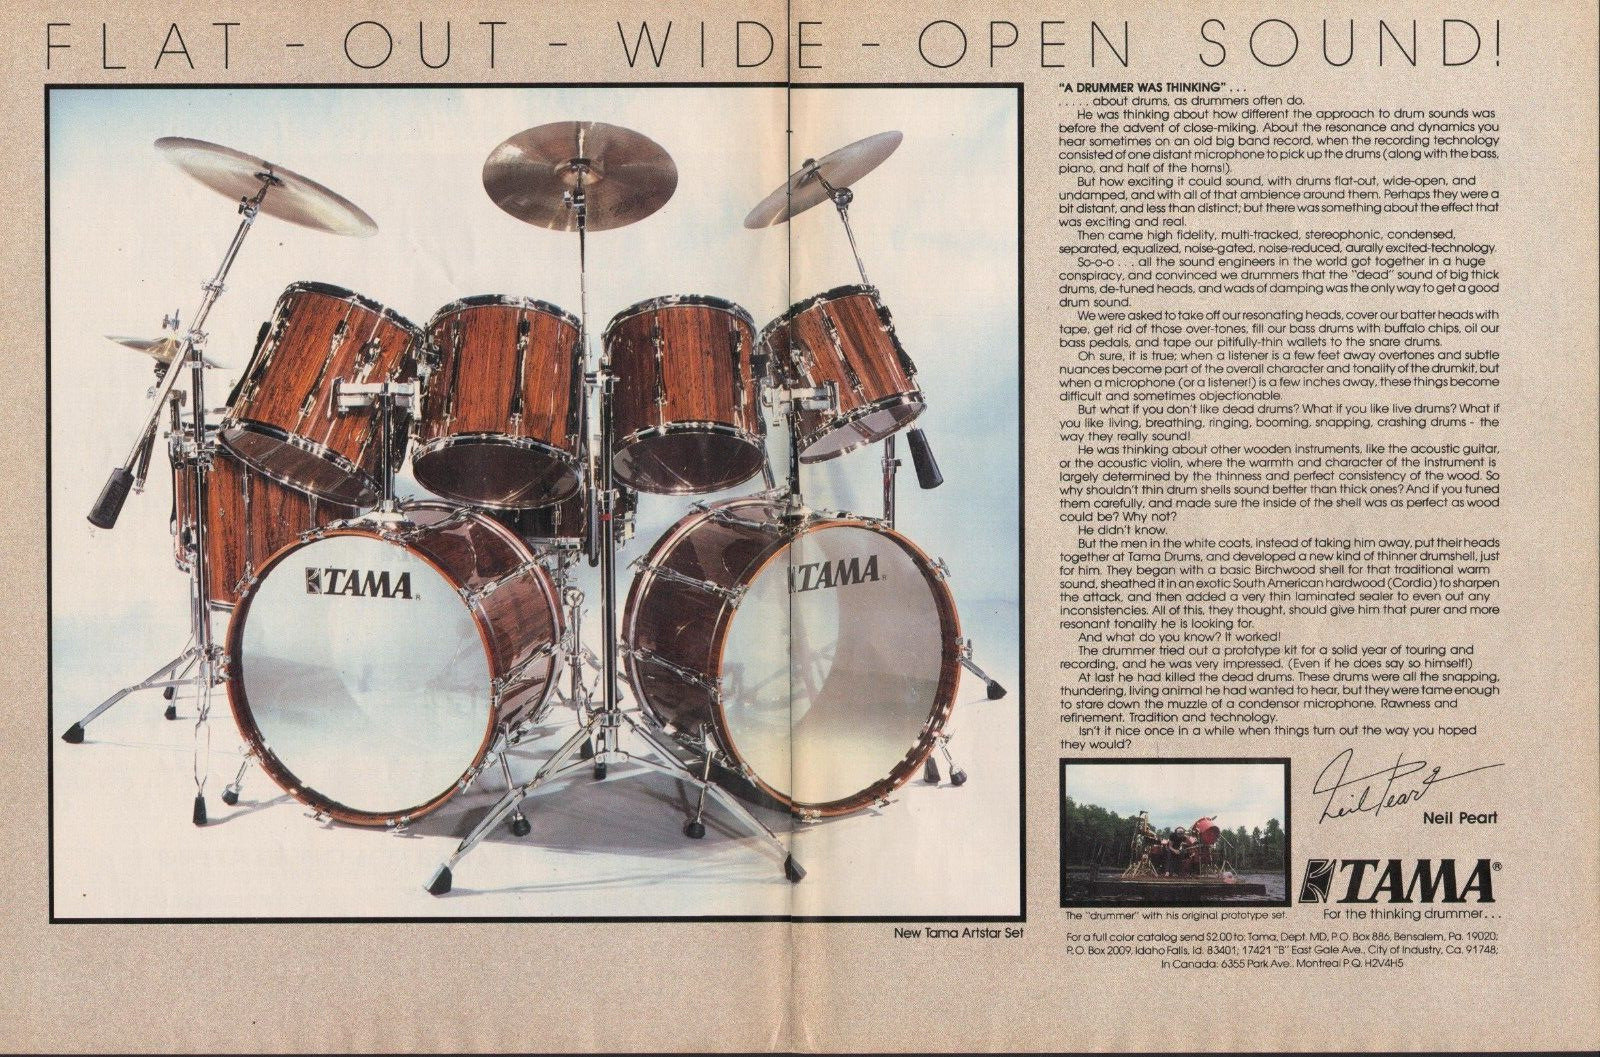 1983 2pg Print Ad of Tama Artstar Drum Kit Concept of Neil Peart RUSH